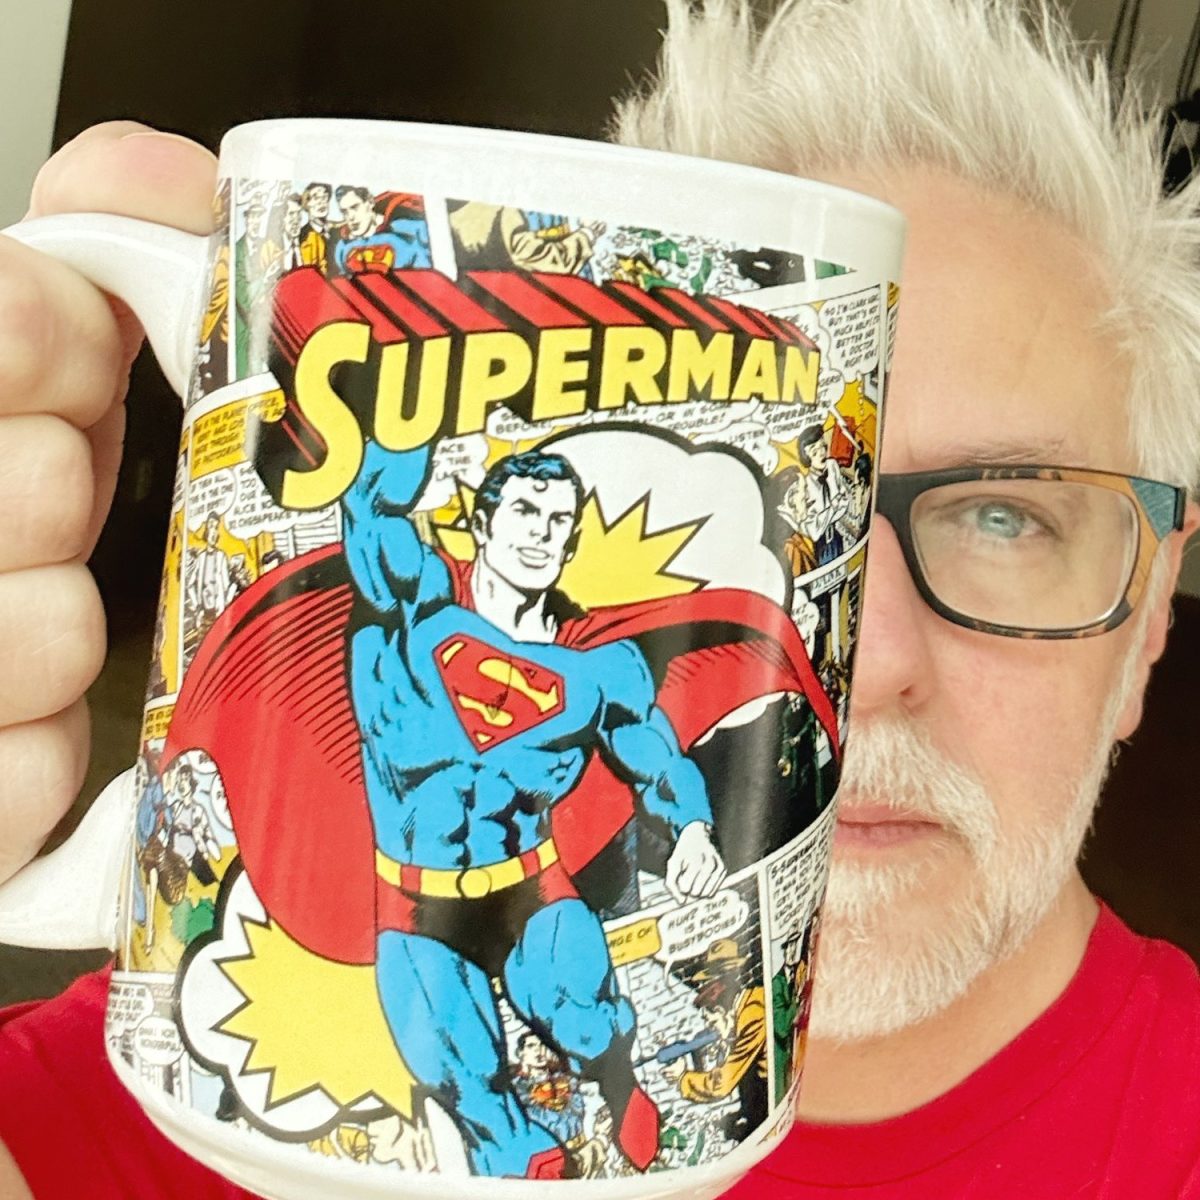 James Gunn Superman twitter